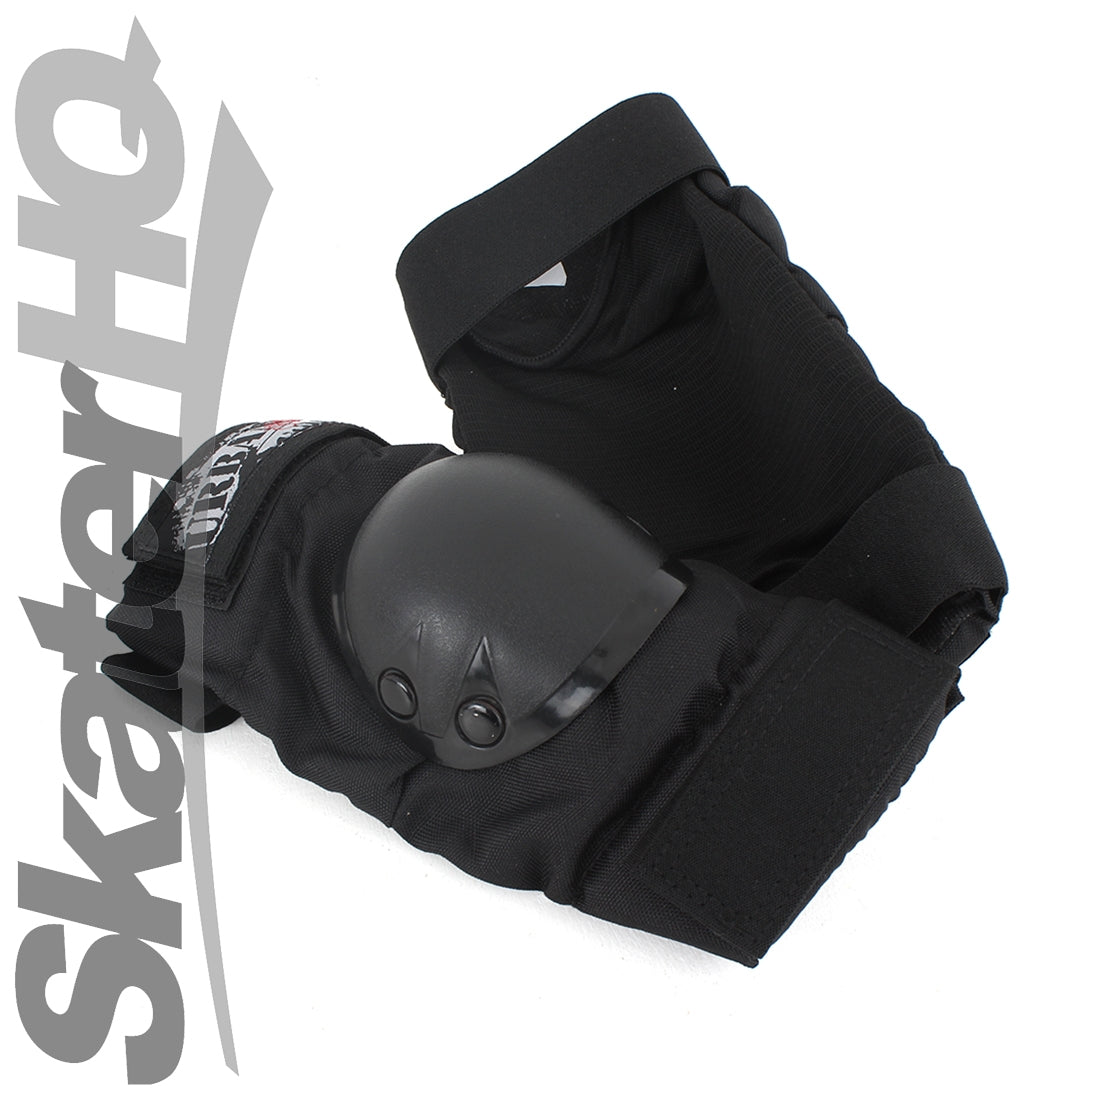 Urban Skater Tri Pack Black - Grommet Protective Gear